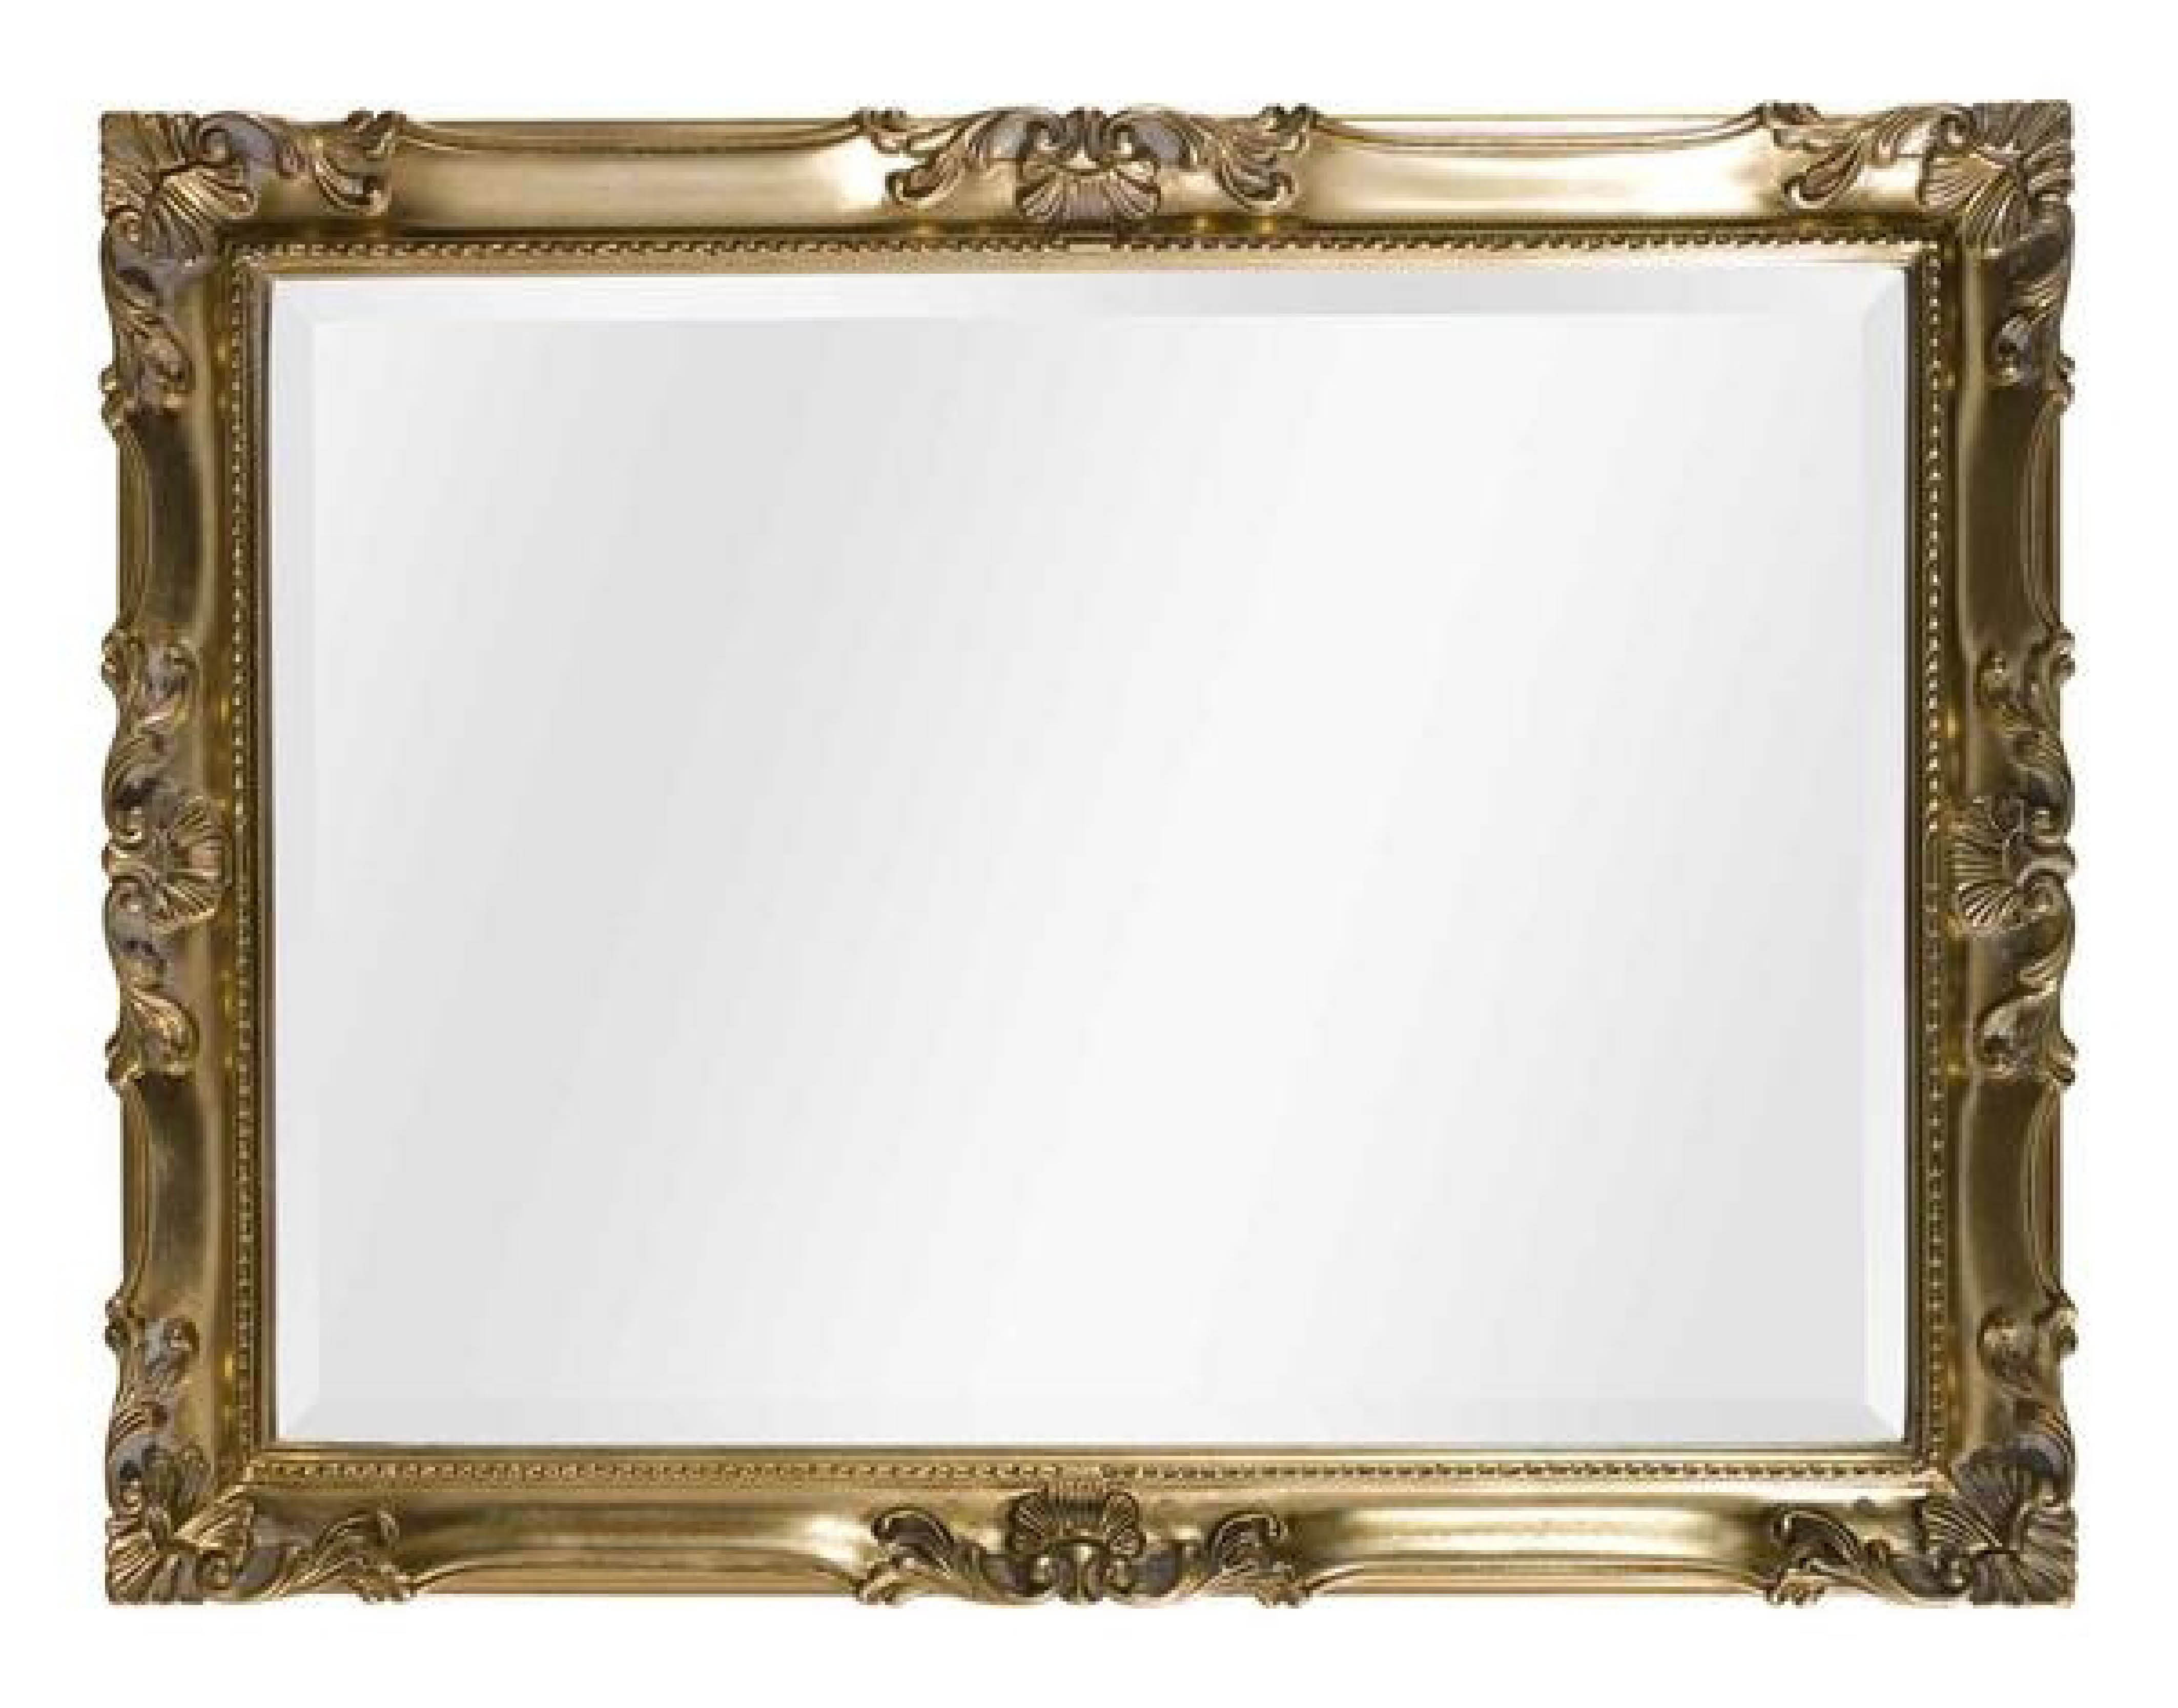 Modell Sissi, rechteckig, Barockspiegel, Style: klassisch, Blattgold, Herstellung: ASR-Rahmendesign Material: Holz, Spiegel Facette, Frontansicht quer